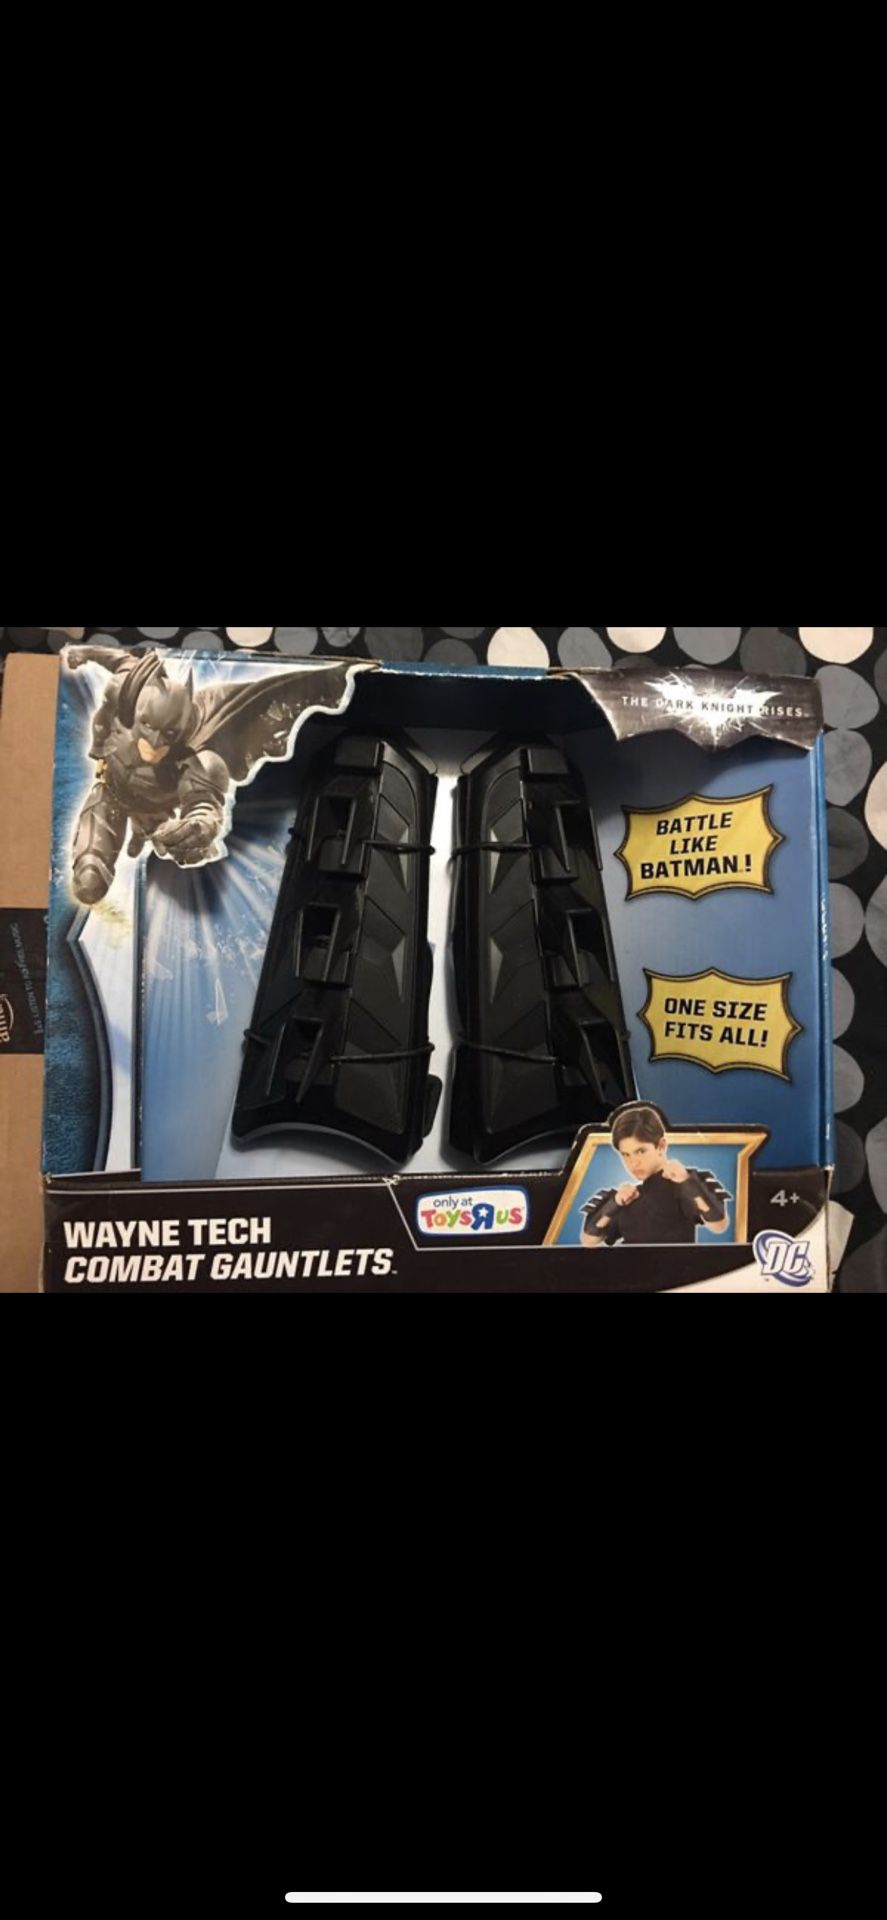 Batman tech combat gauntlets in box